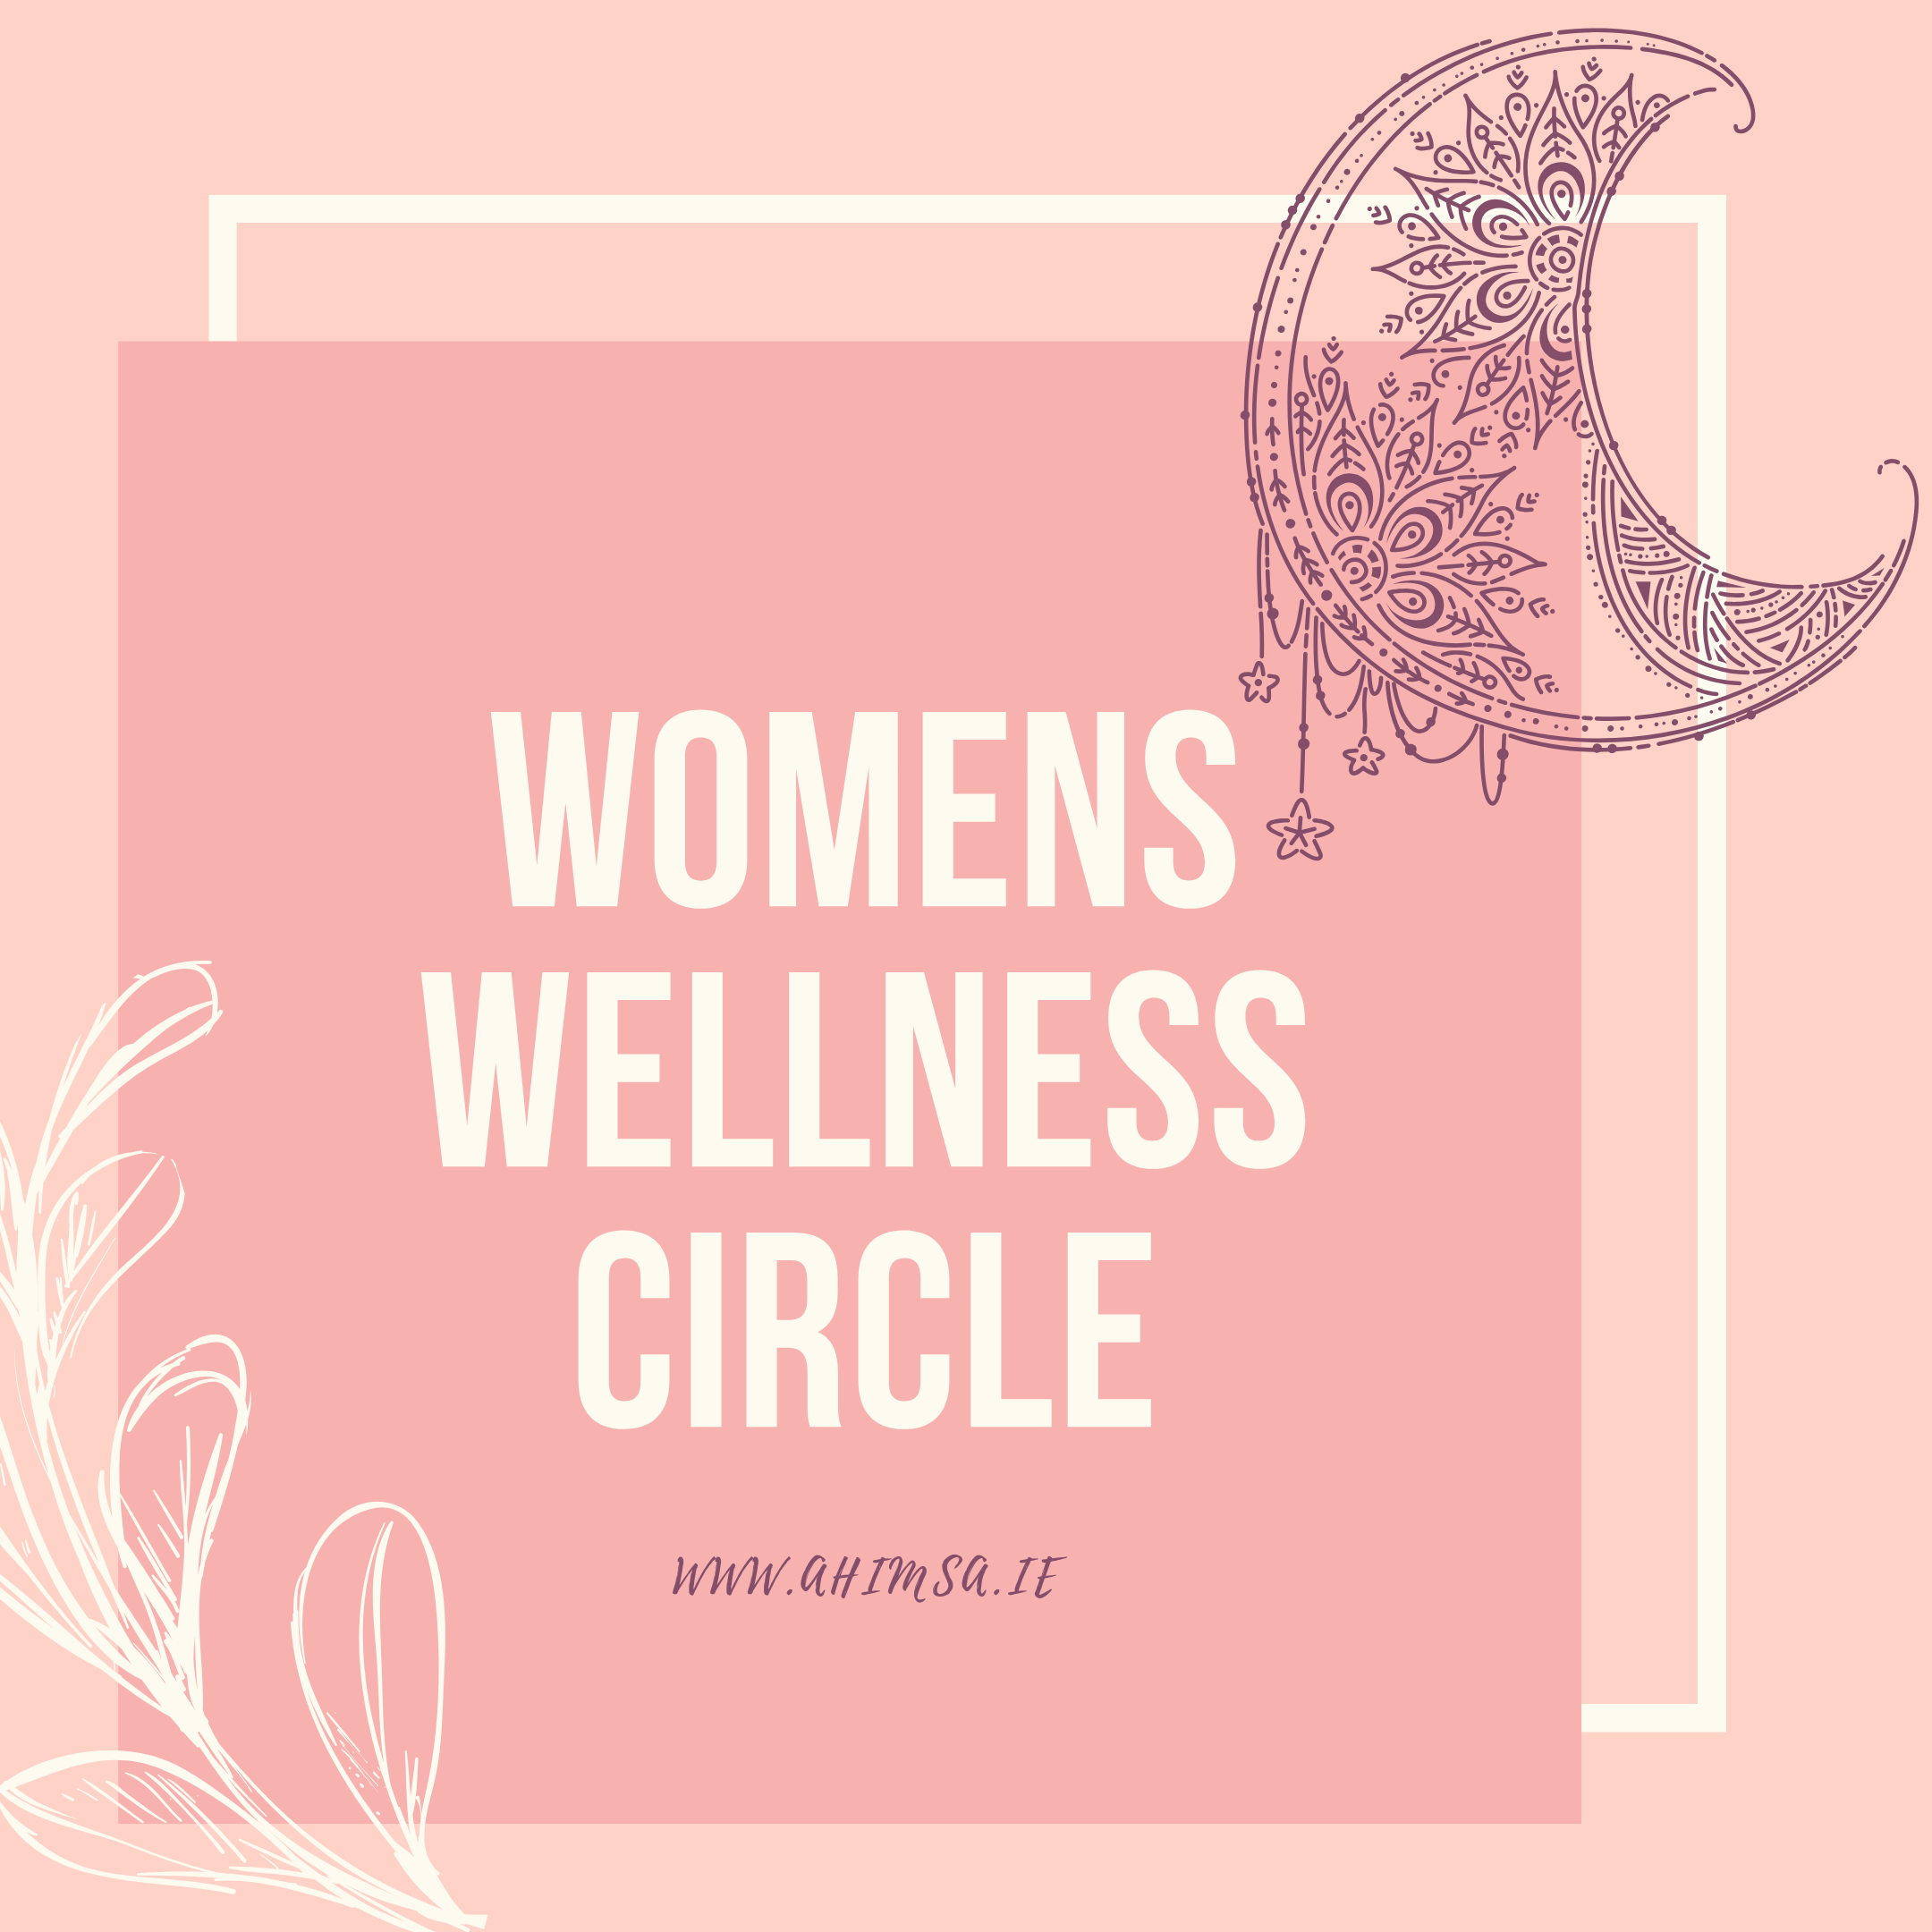 Women’s Wellness Circle, Starting October 8th